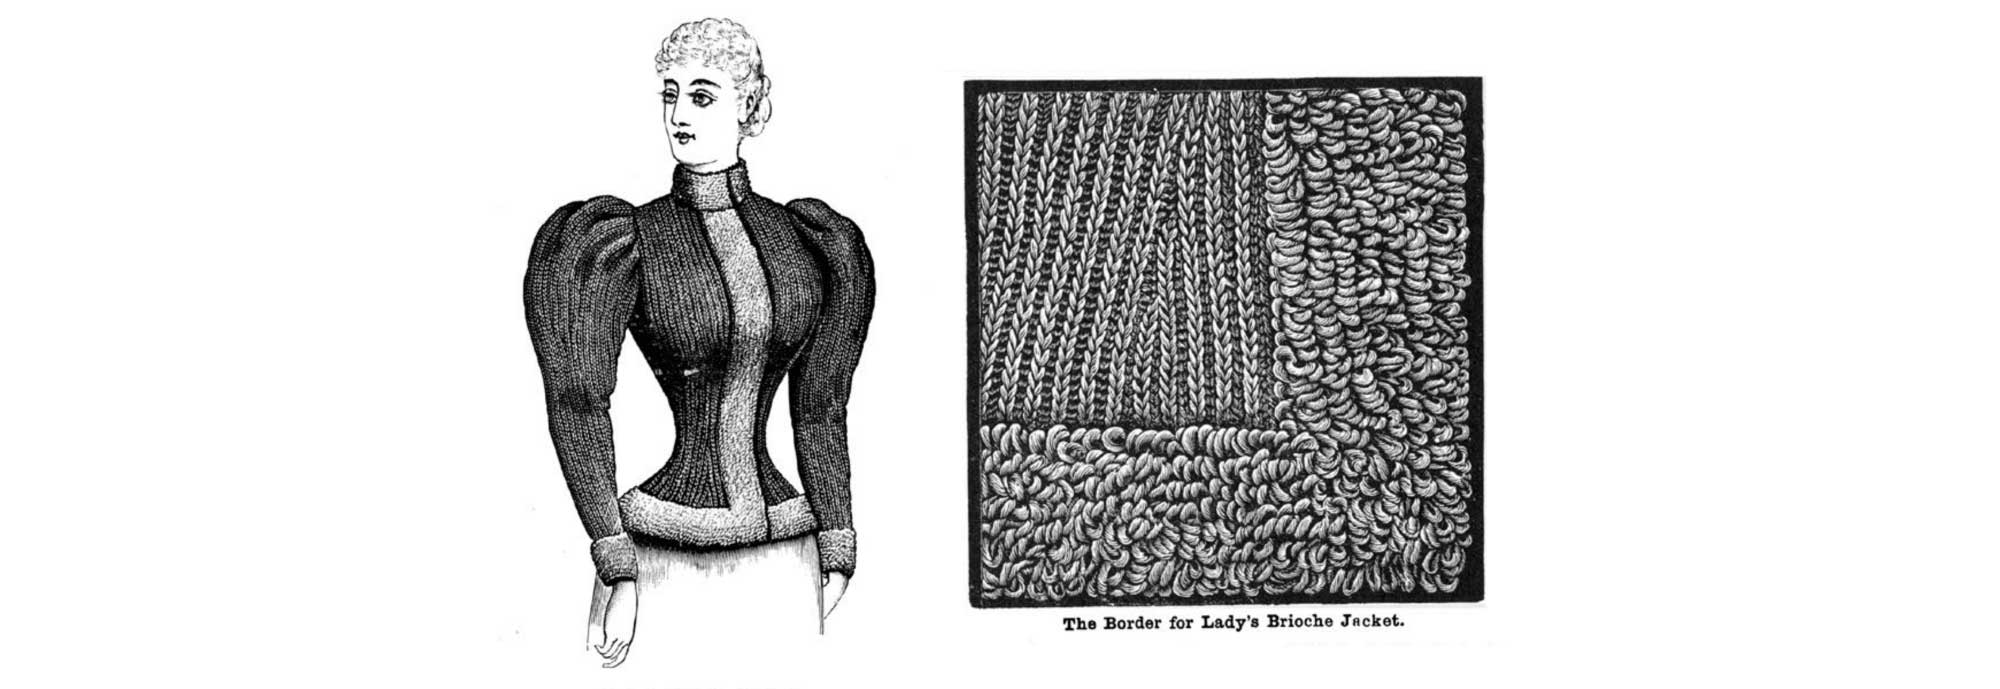 Ladys-Brioche-Jacket